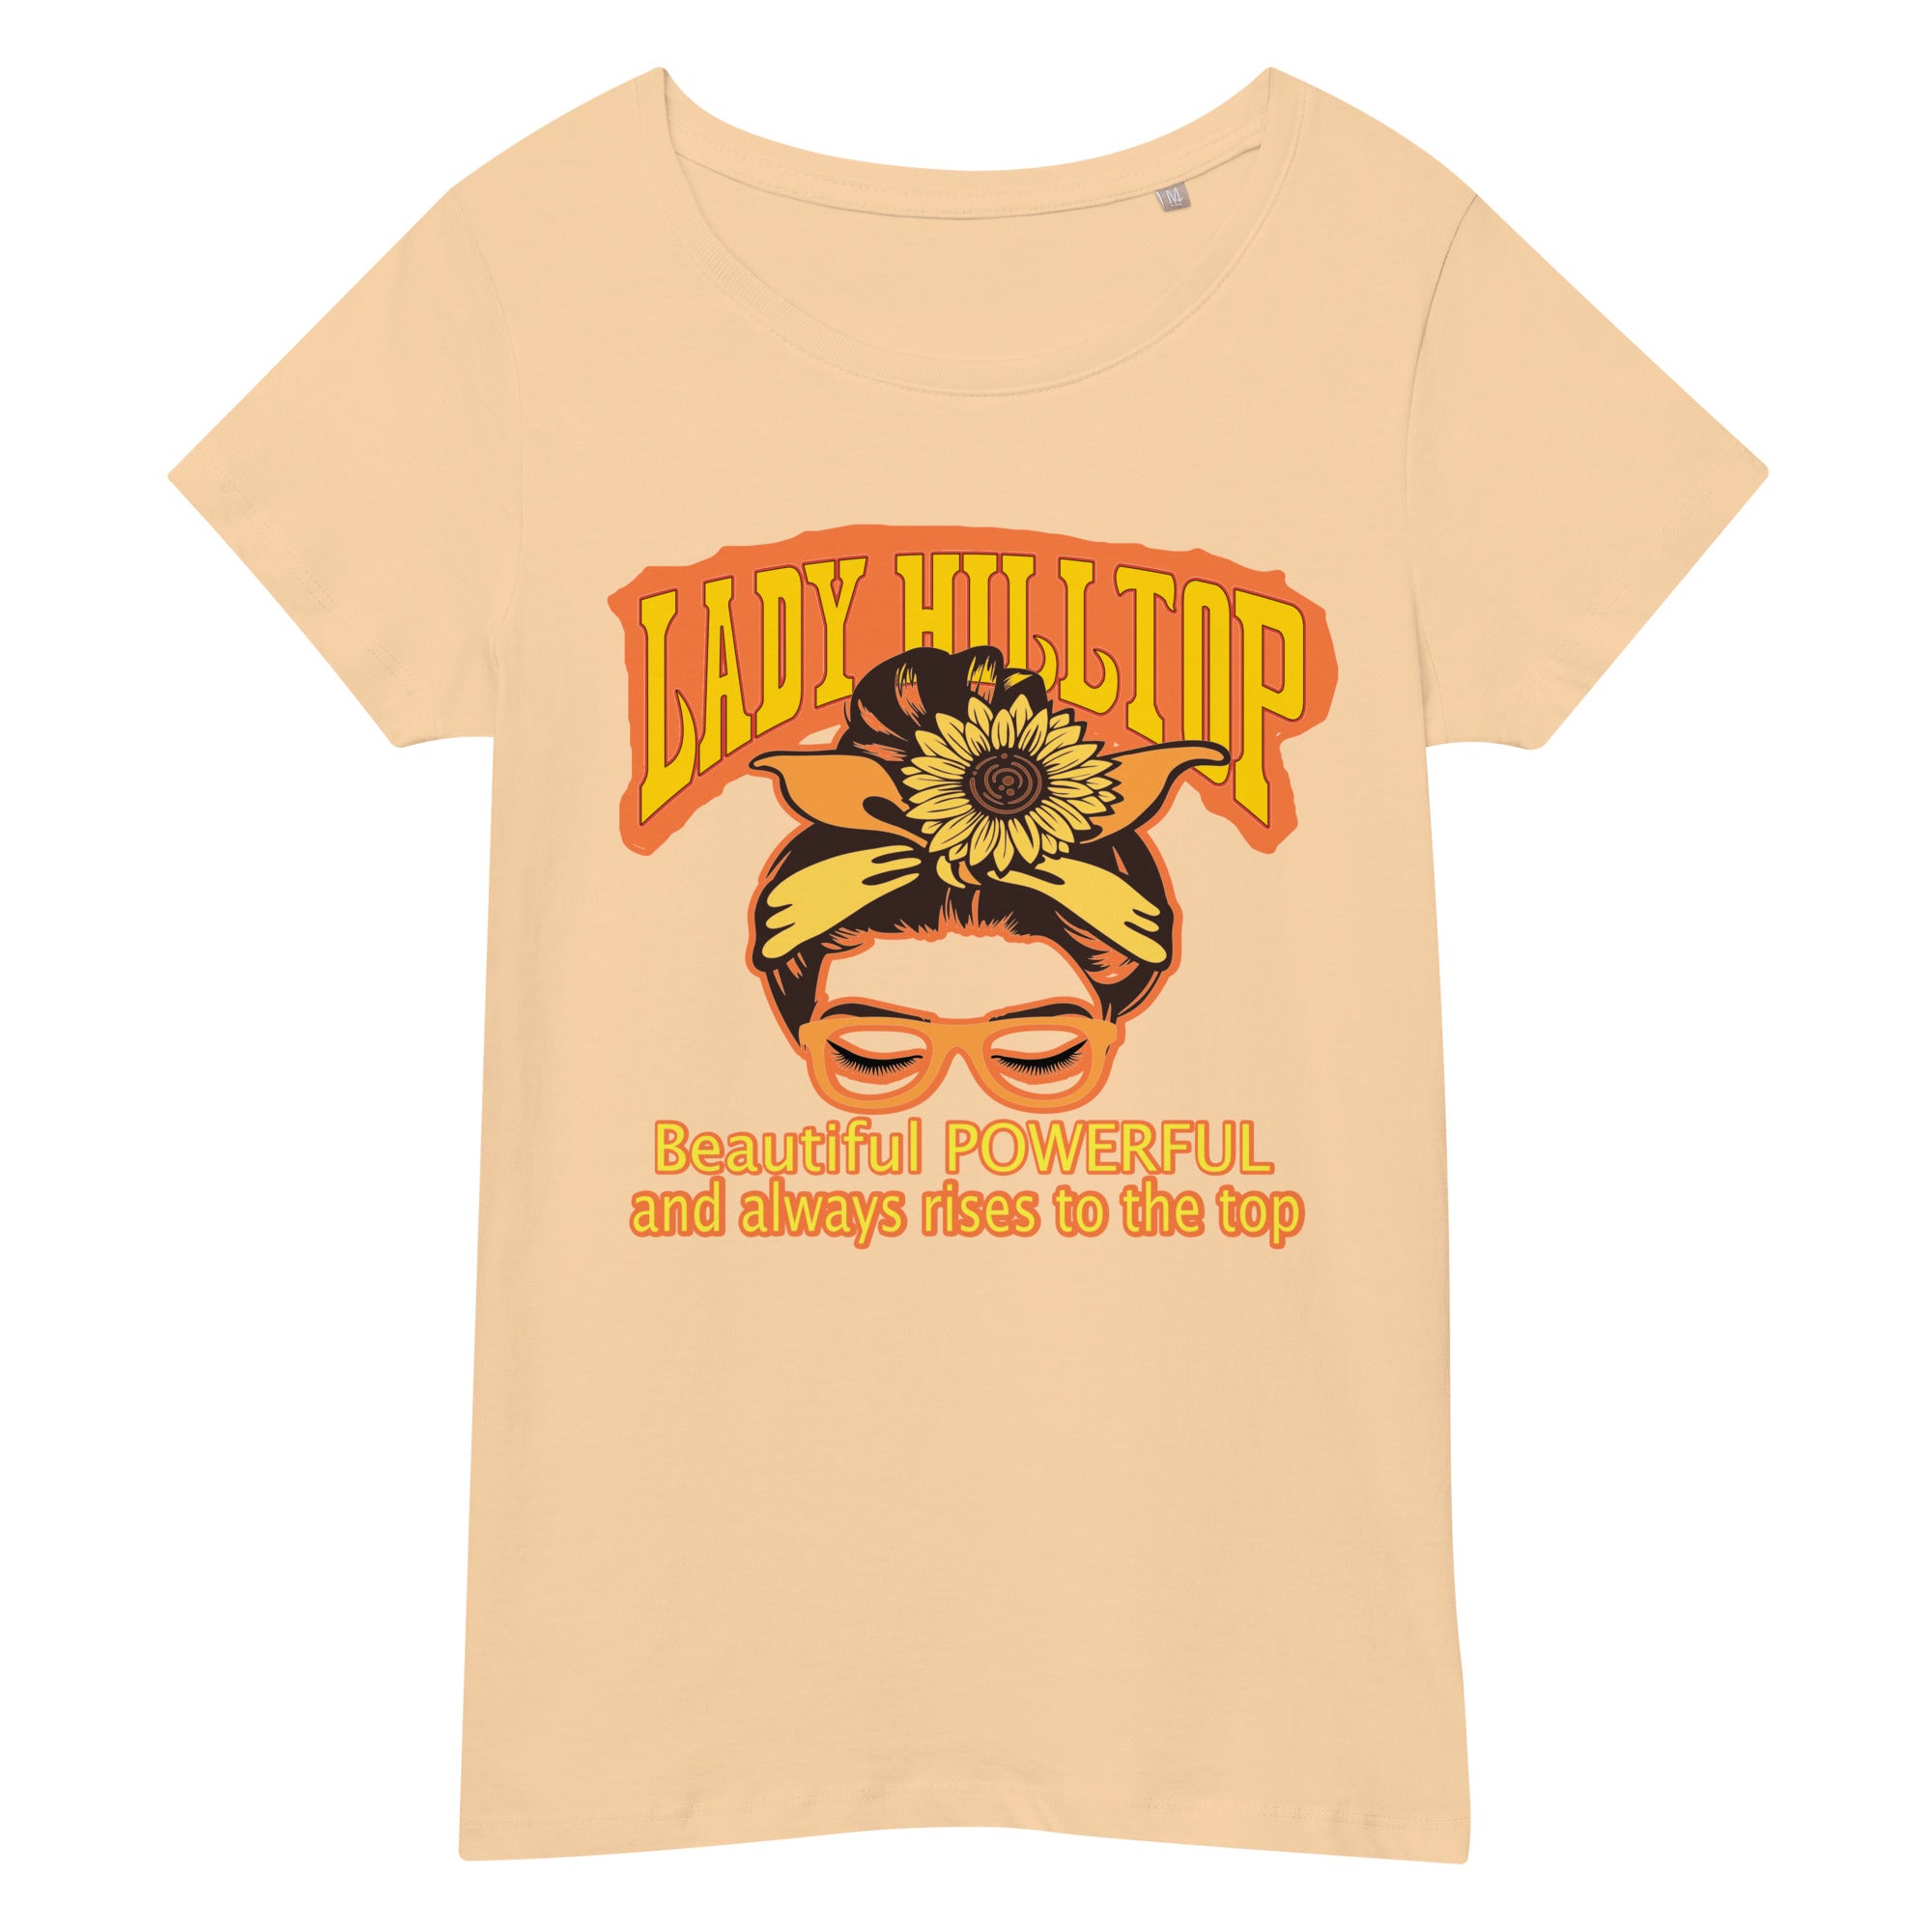 Women’s basic organic t-shirt LADY HILLTOP